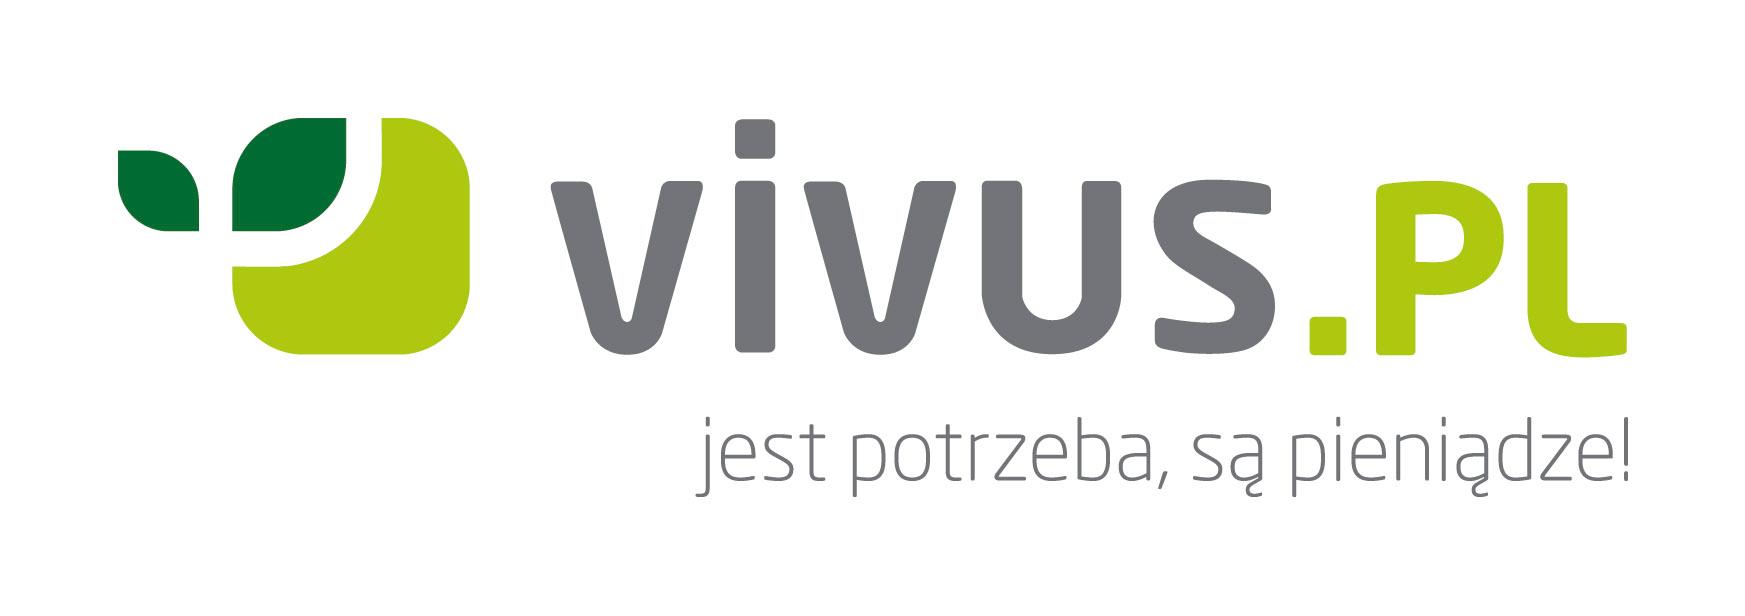 Vivus, pożyczki 